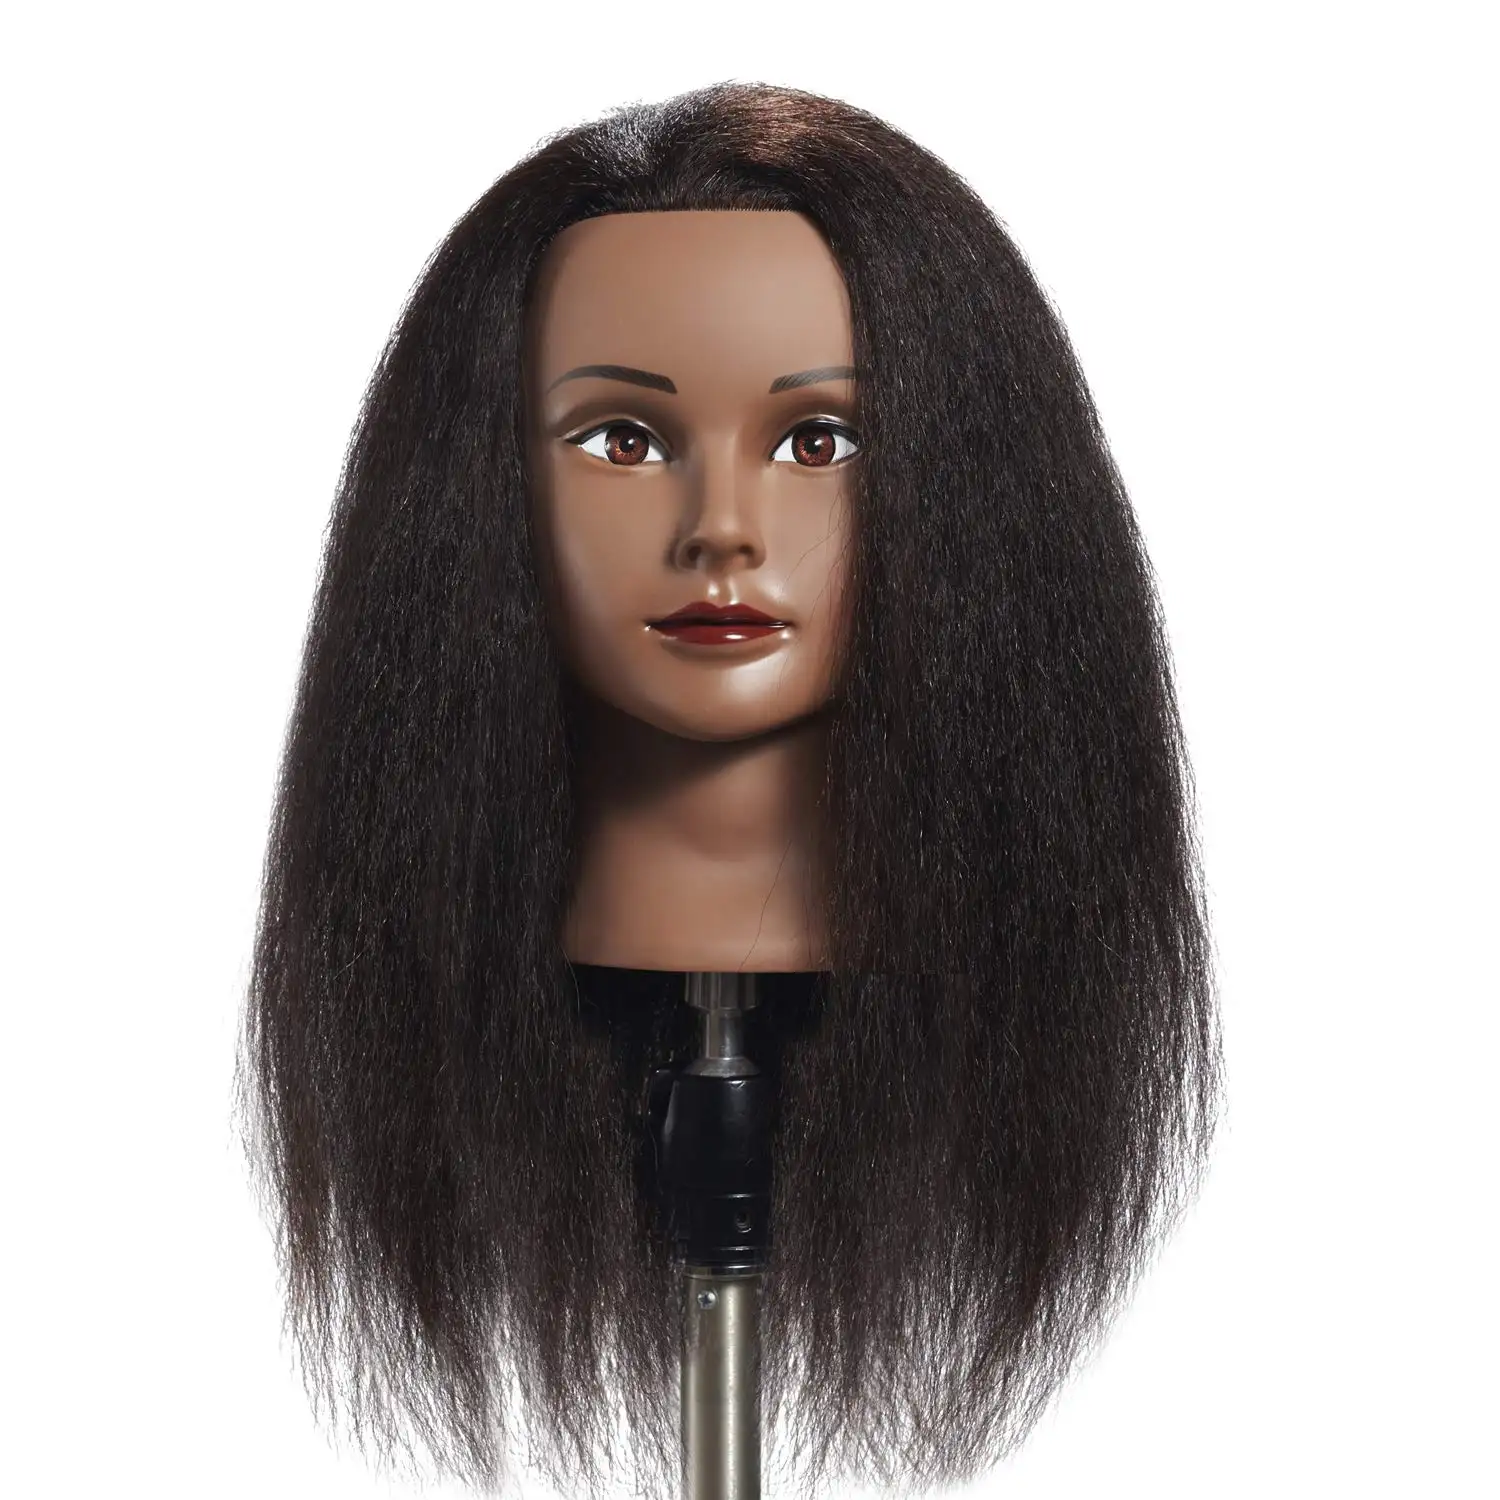 100% Real Hair Mannequin Head Hairdresser Training Head Manikin Cosmetology Doll Head